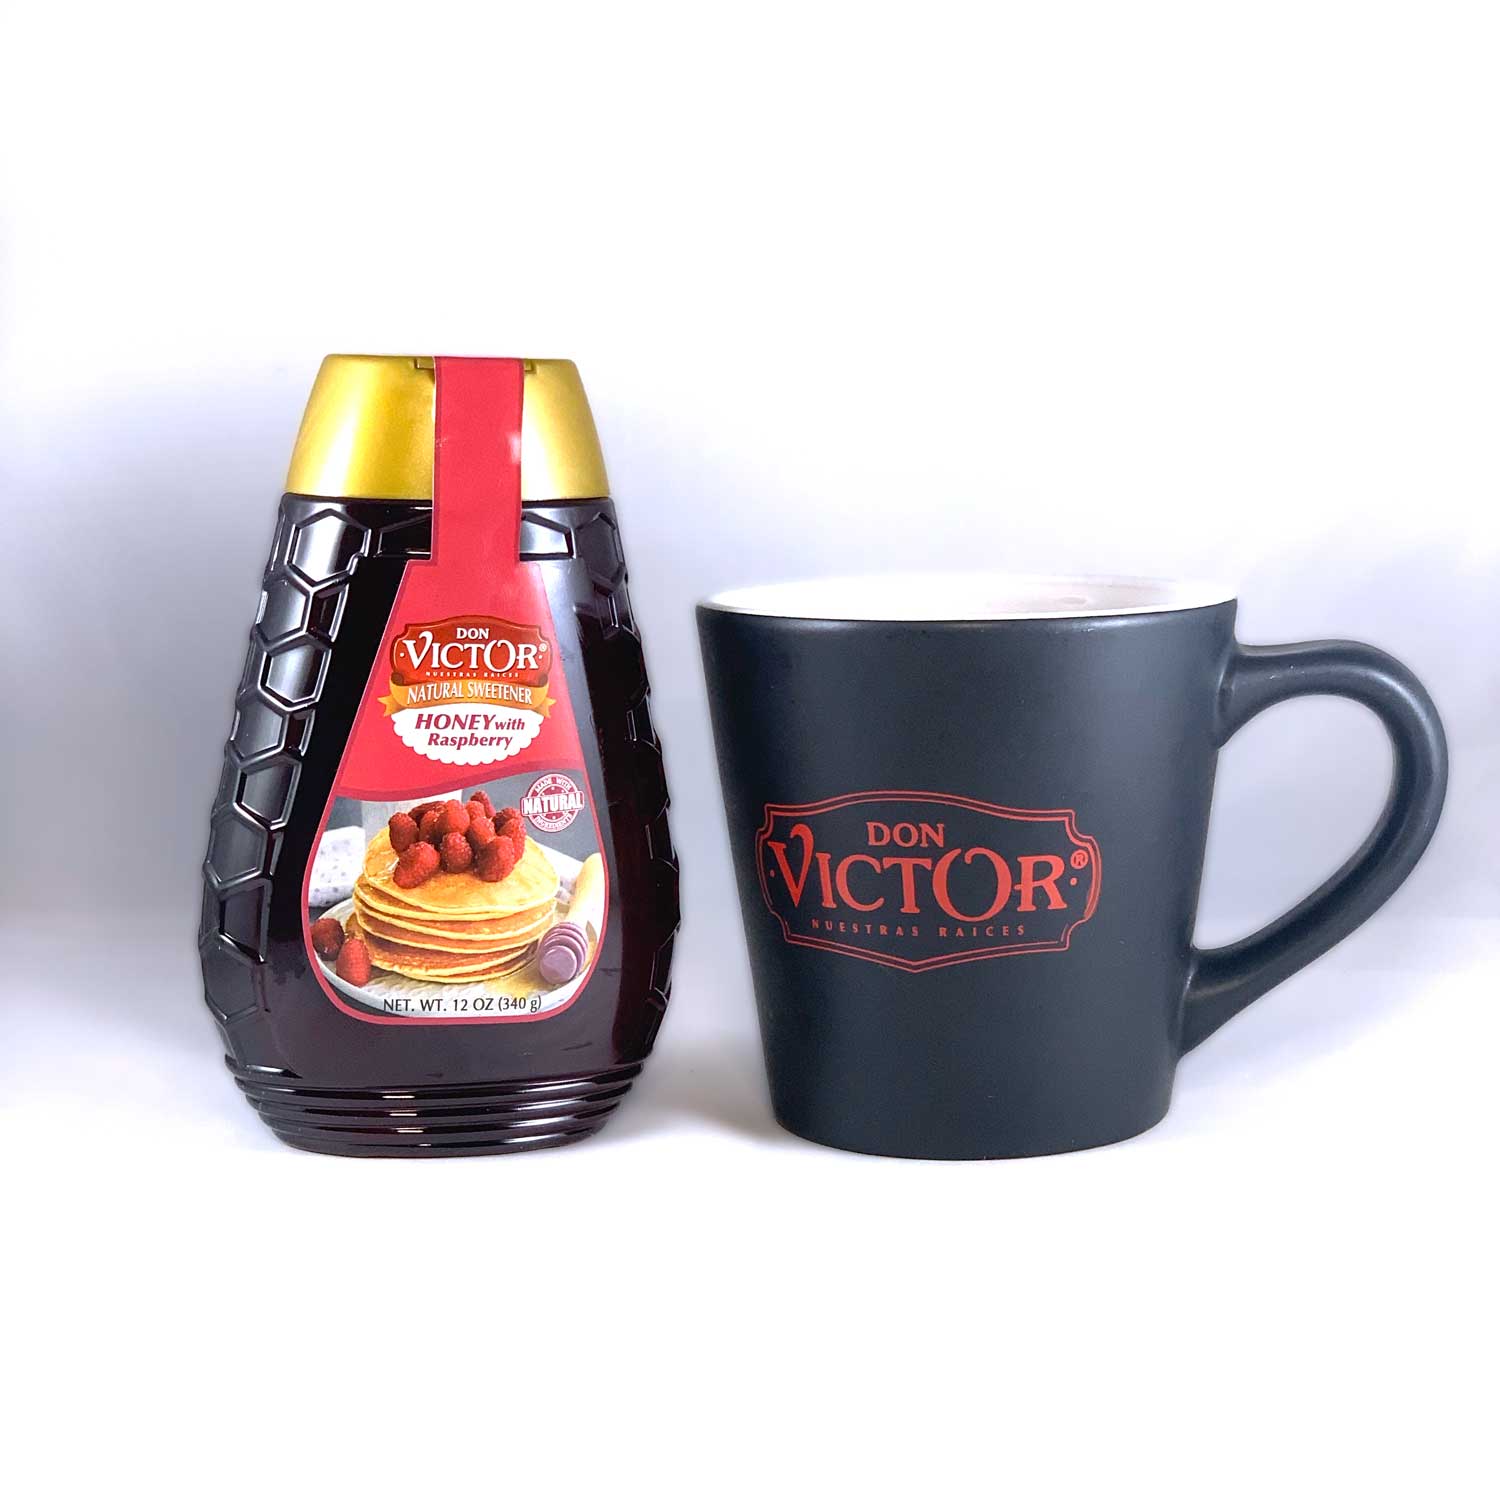 Bottle of Don Victor natural raspberry flavored honey beside a steaming mug of hot black tea.